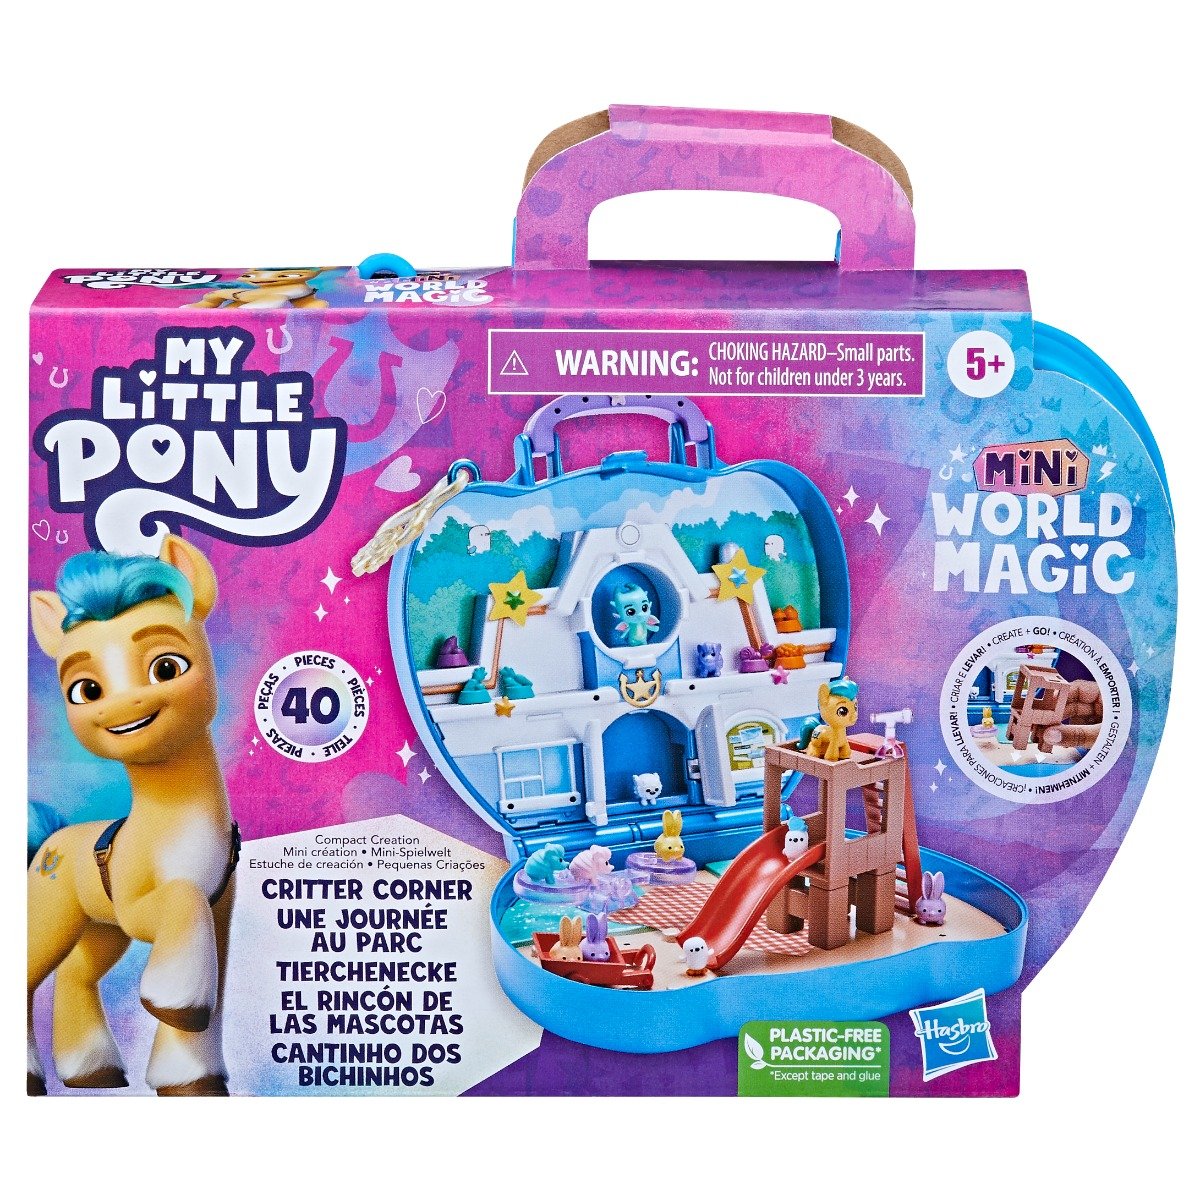 Set de joaca cu figurina, My Little Pony, Mini World Magic, Critter Corner, F6440